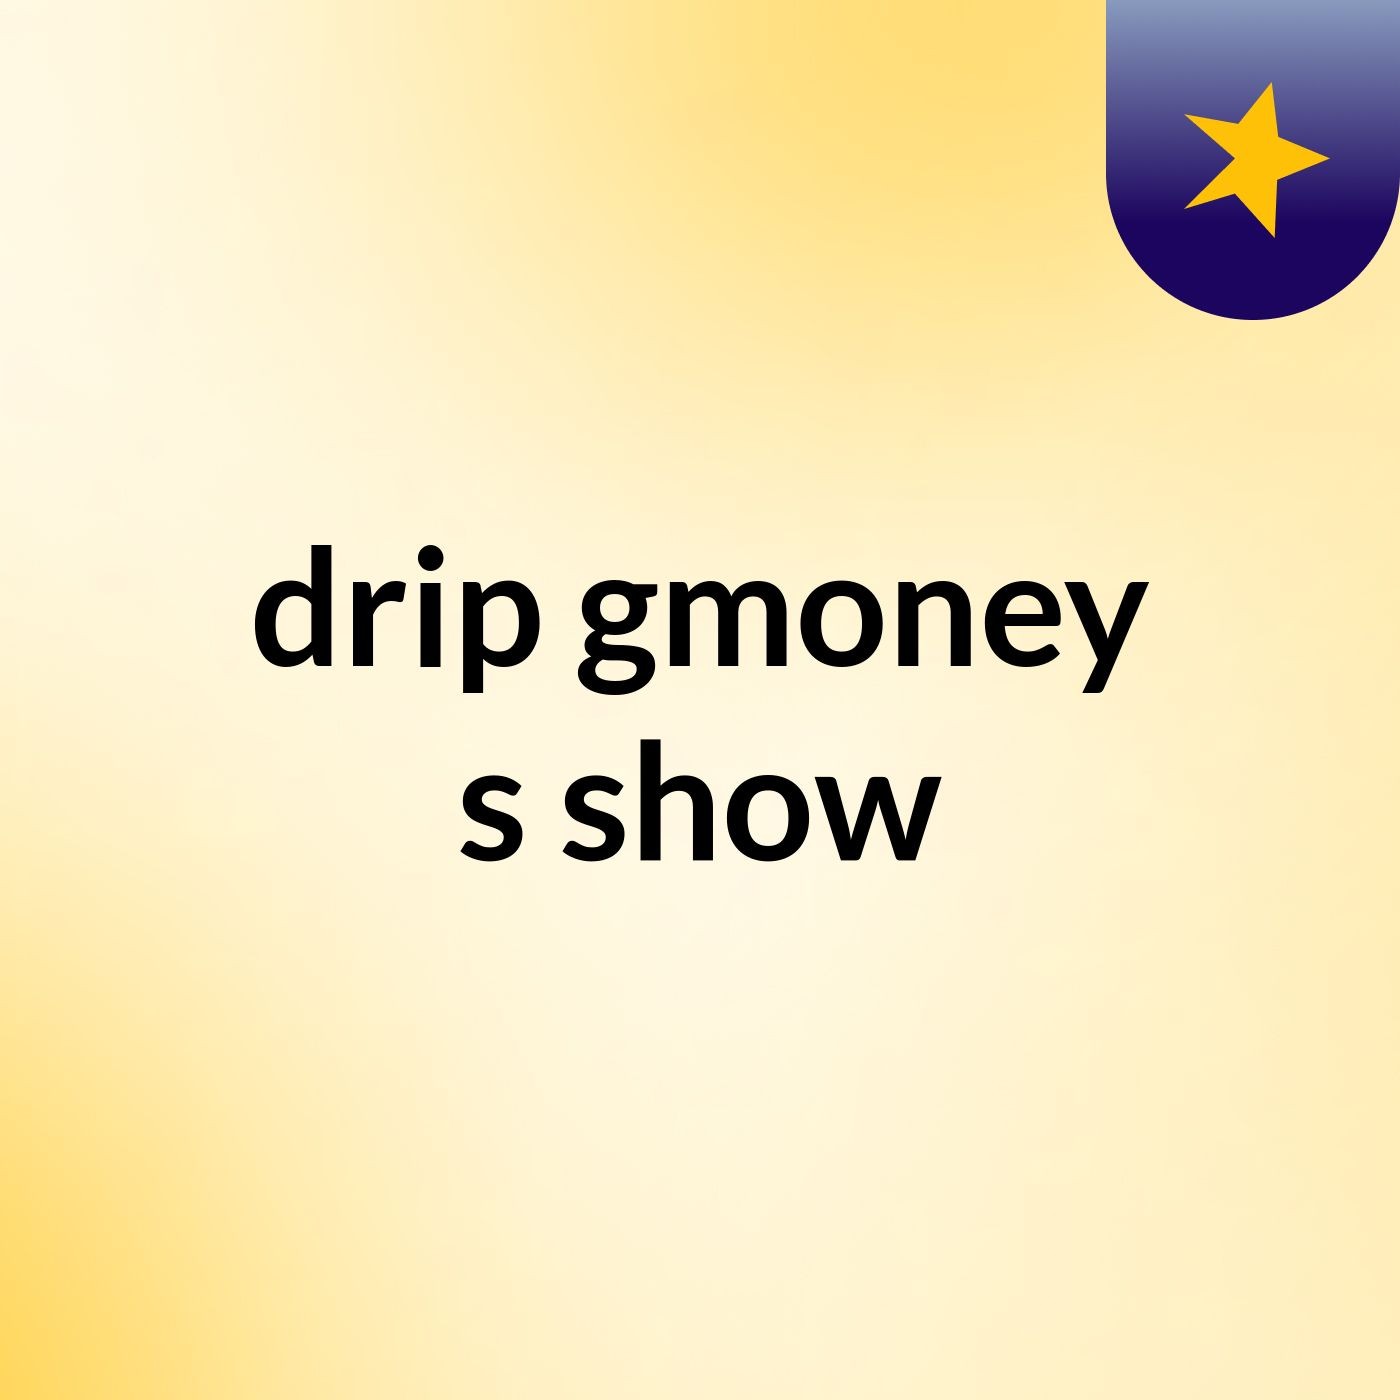 drip gmoney's show